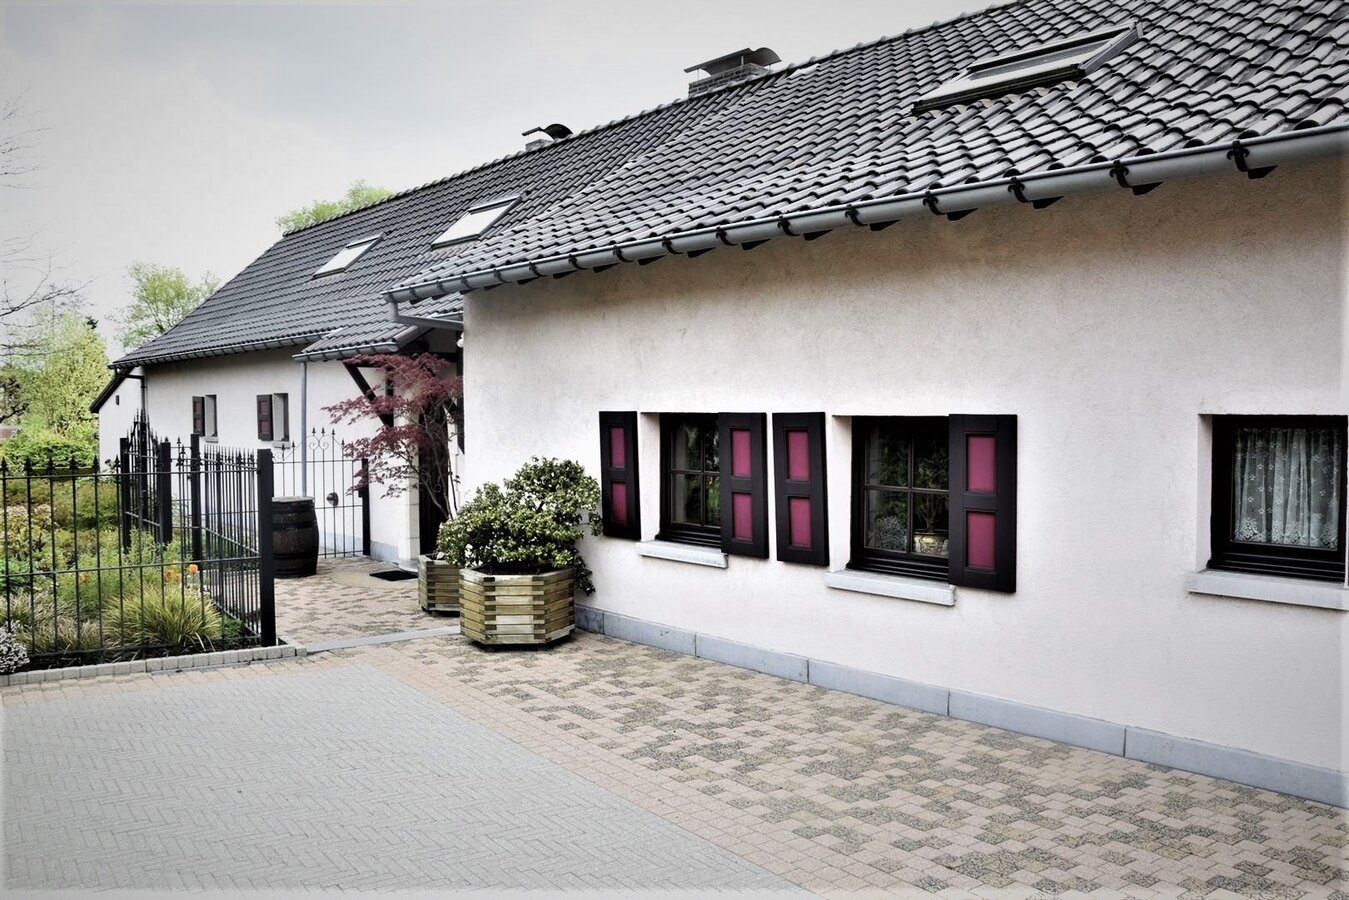 Property sold in Essene